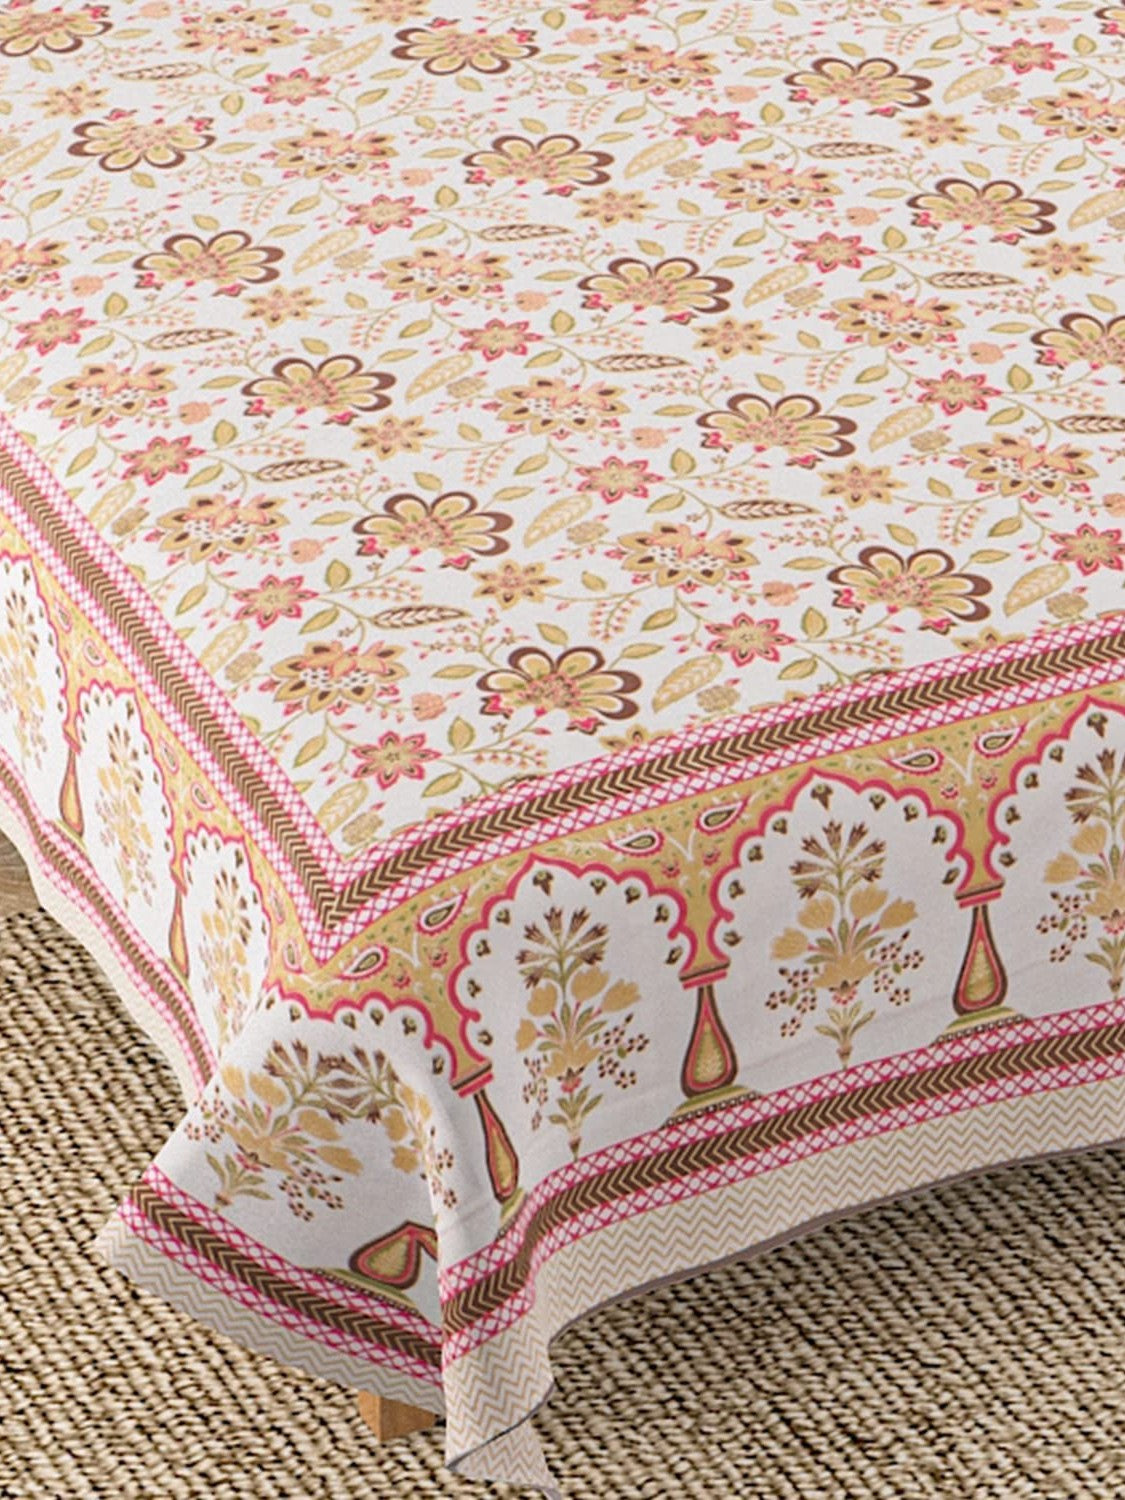 Jaipuri bedsheet King Size 100% Cotton bedsheet with 2 Pillow Covers